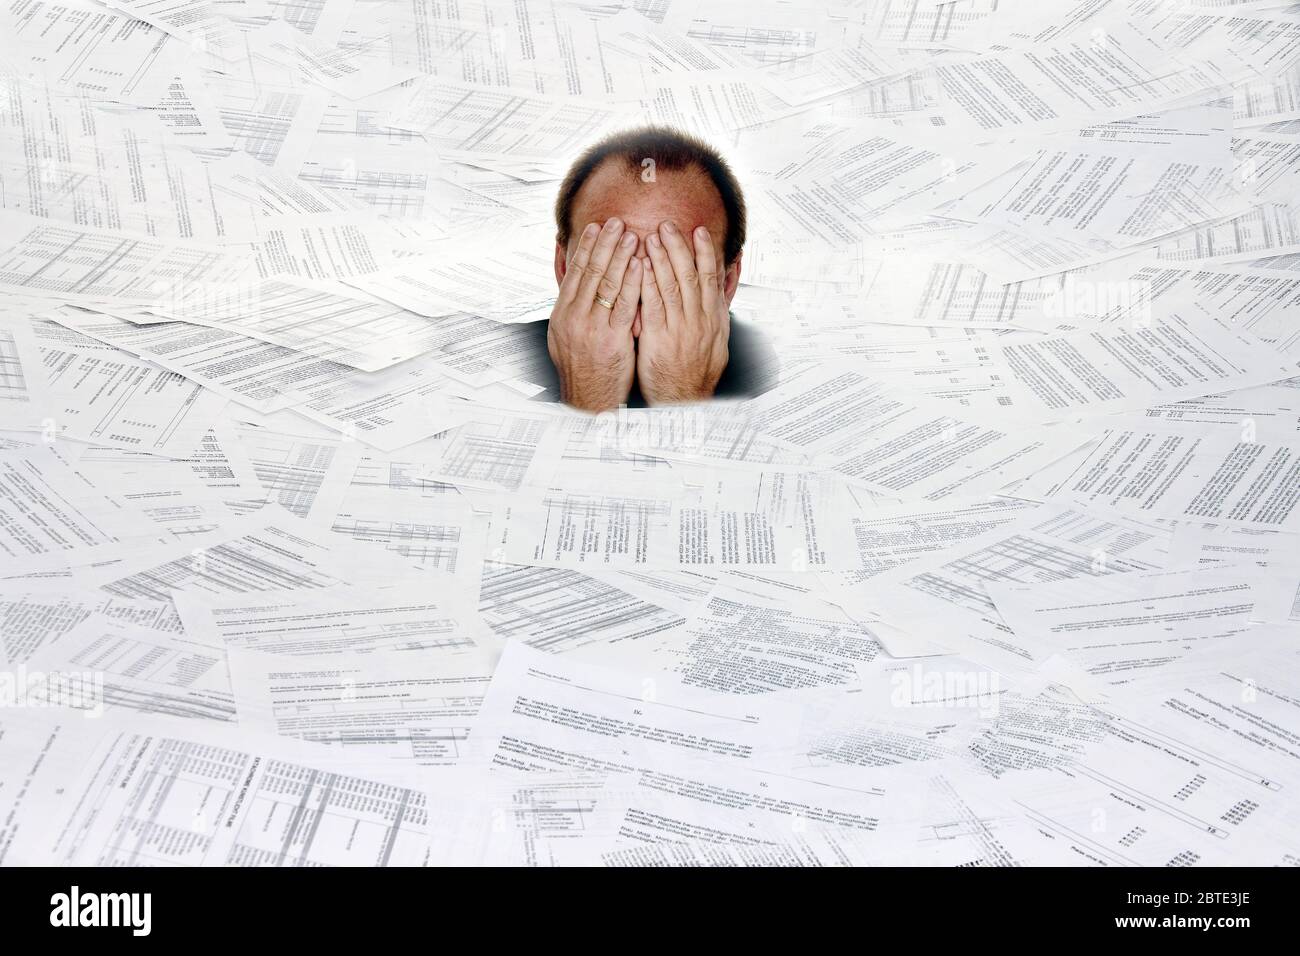 man between documents, too much bureaucracy, Austria Stock Photo